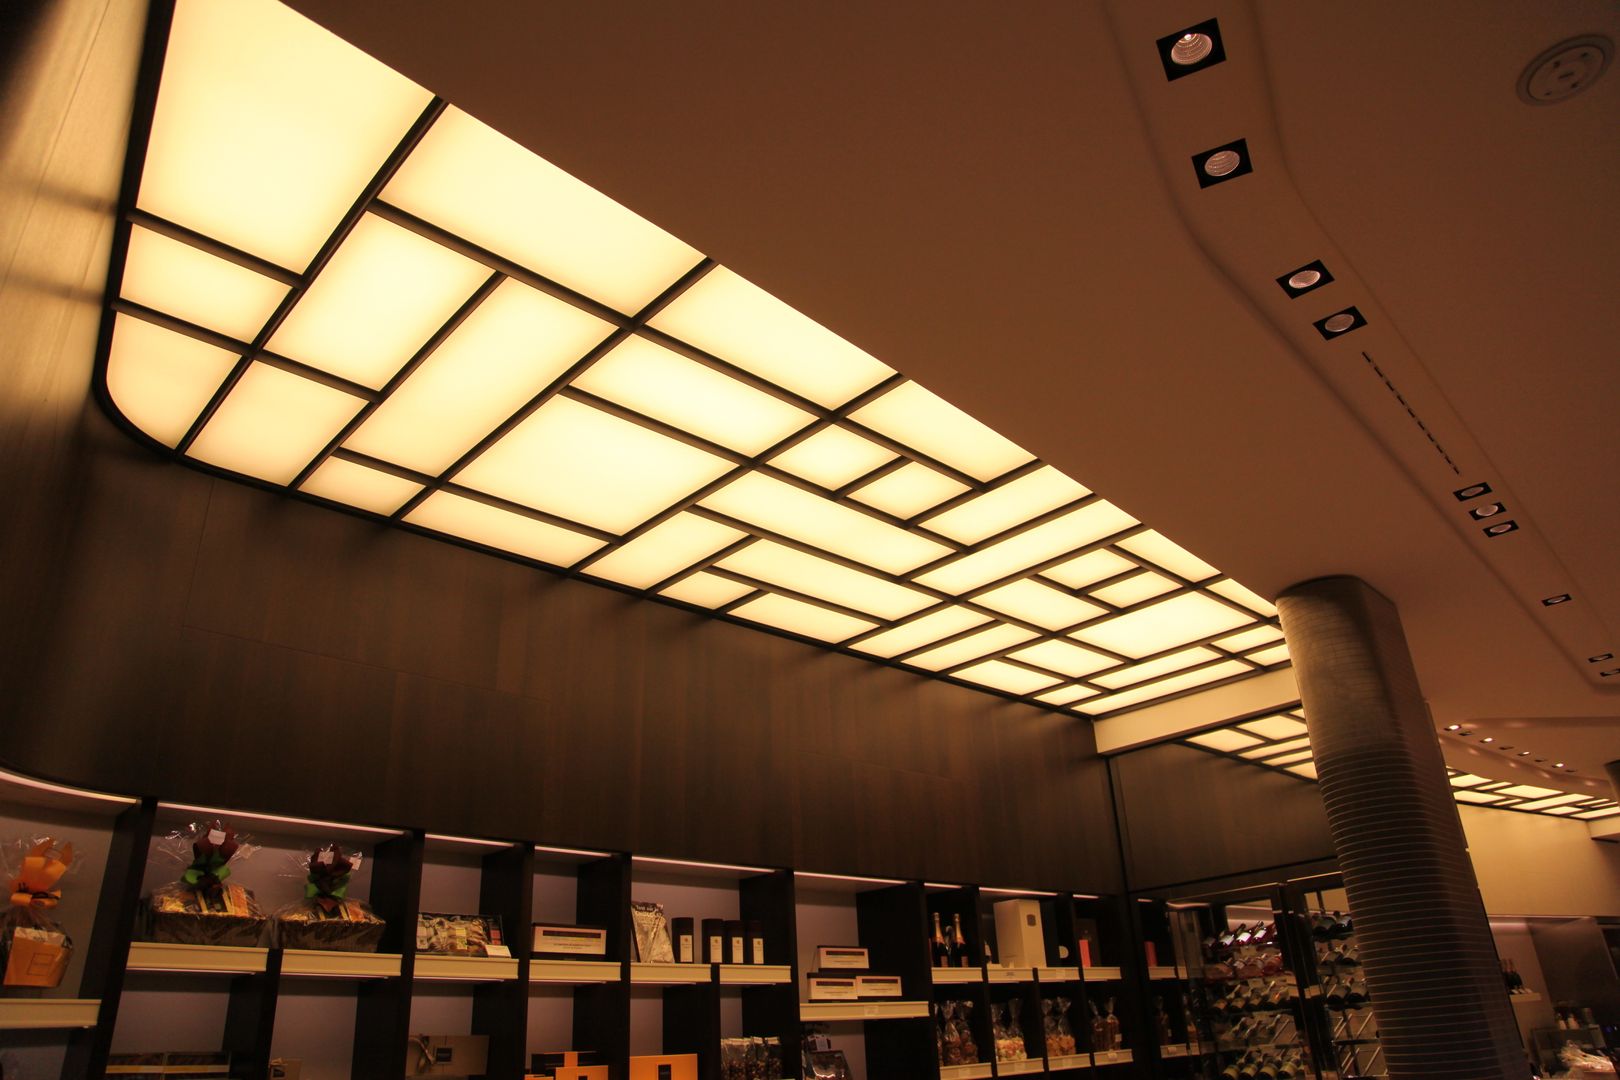 Plafond lumineux sur mesure by MOROSINI.COM, Morosini Morosini Espacios comerciales Tiendas y espacios comerciales